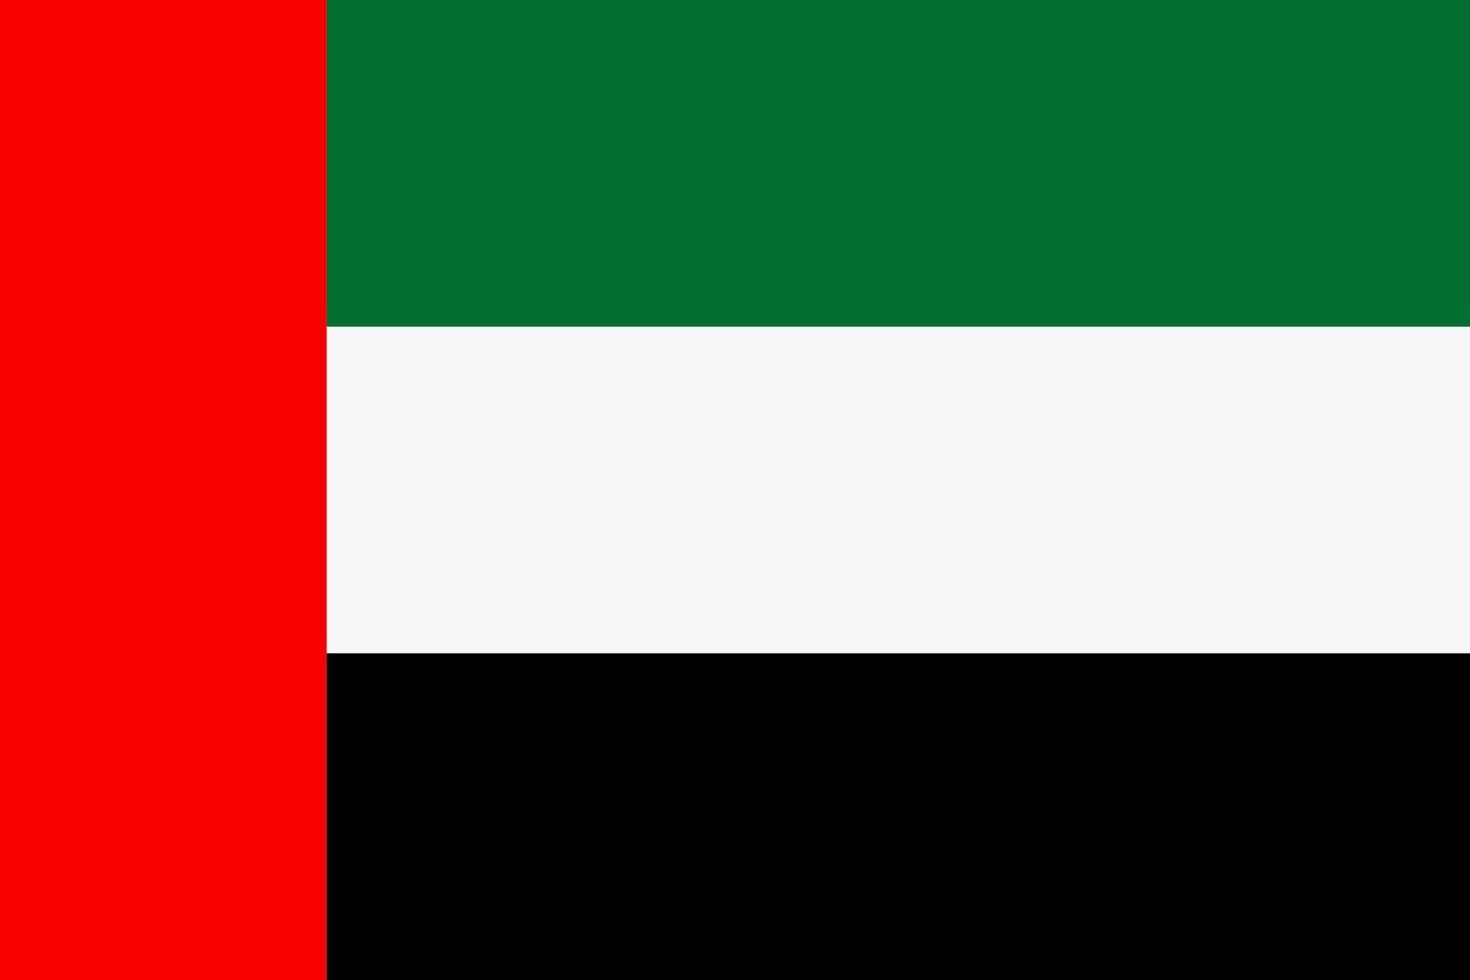 UAE flag vector icon. The flag of the United Arab Emirates